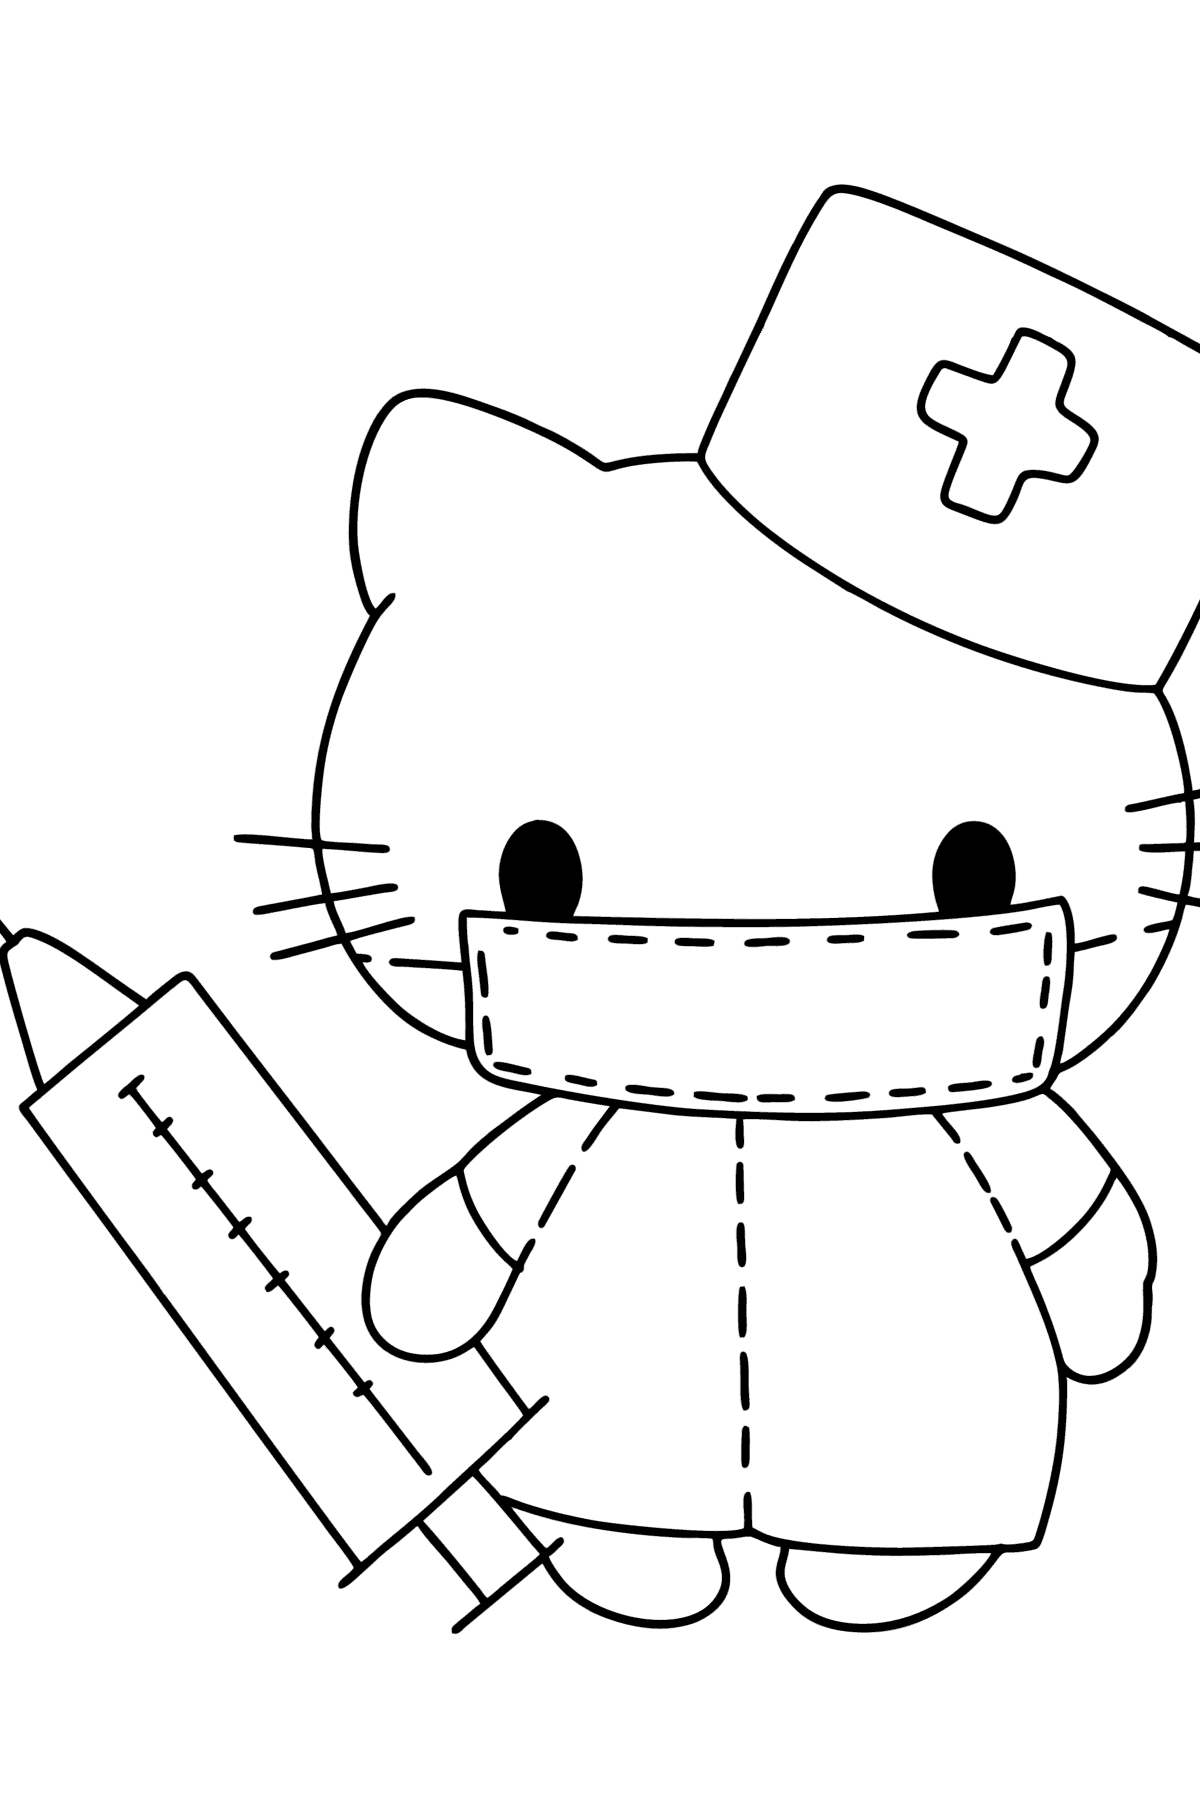 Dibujo de Enfermera Hello Kitty para colorear - Dibujos para Colorear para Niños